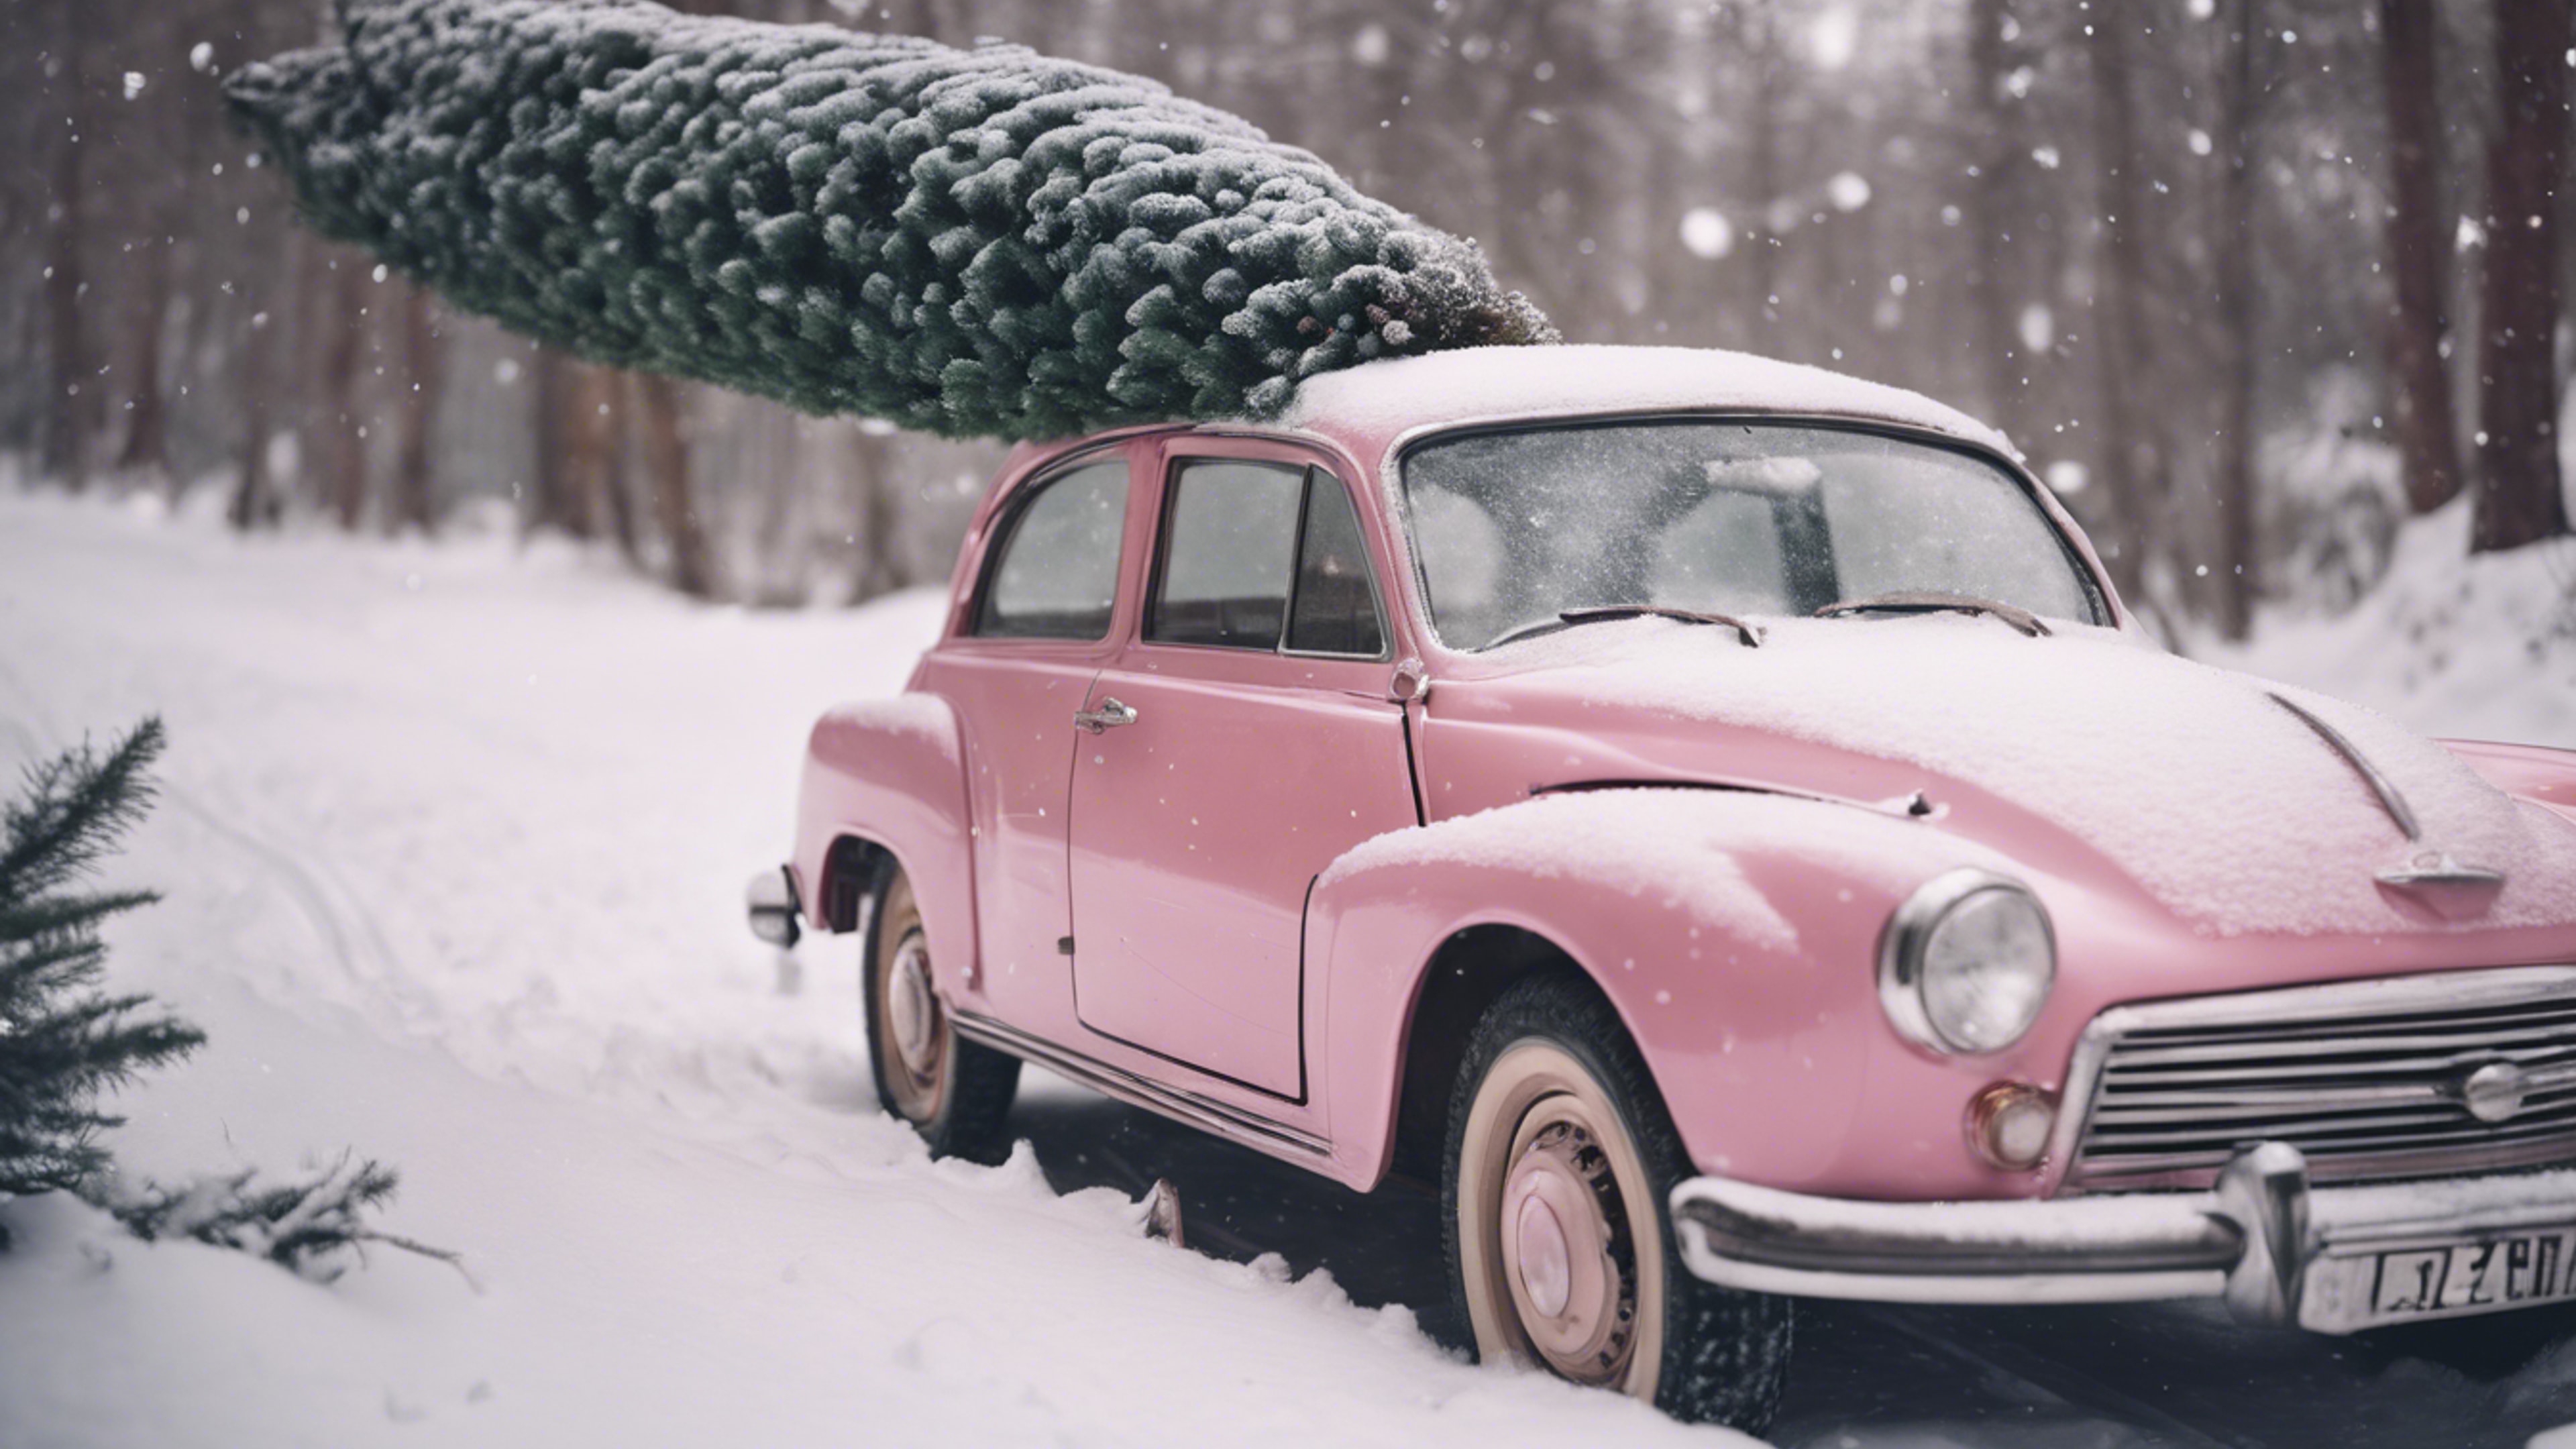 A retro pink car carrying a freshly cut Christmas tree on snowy roads.壁紙[b34e85bc5da446a1b888]